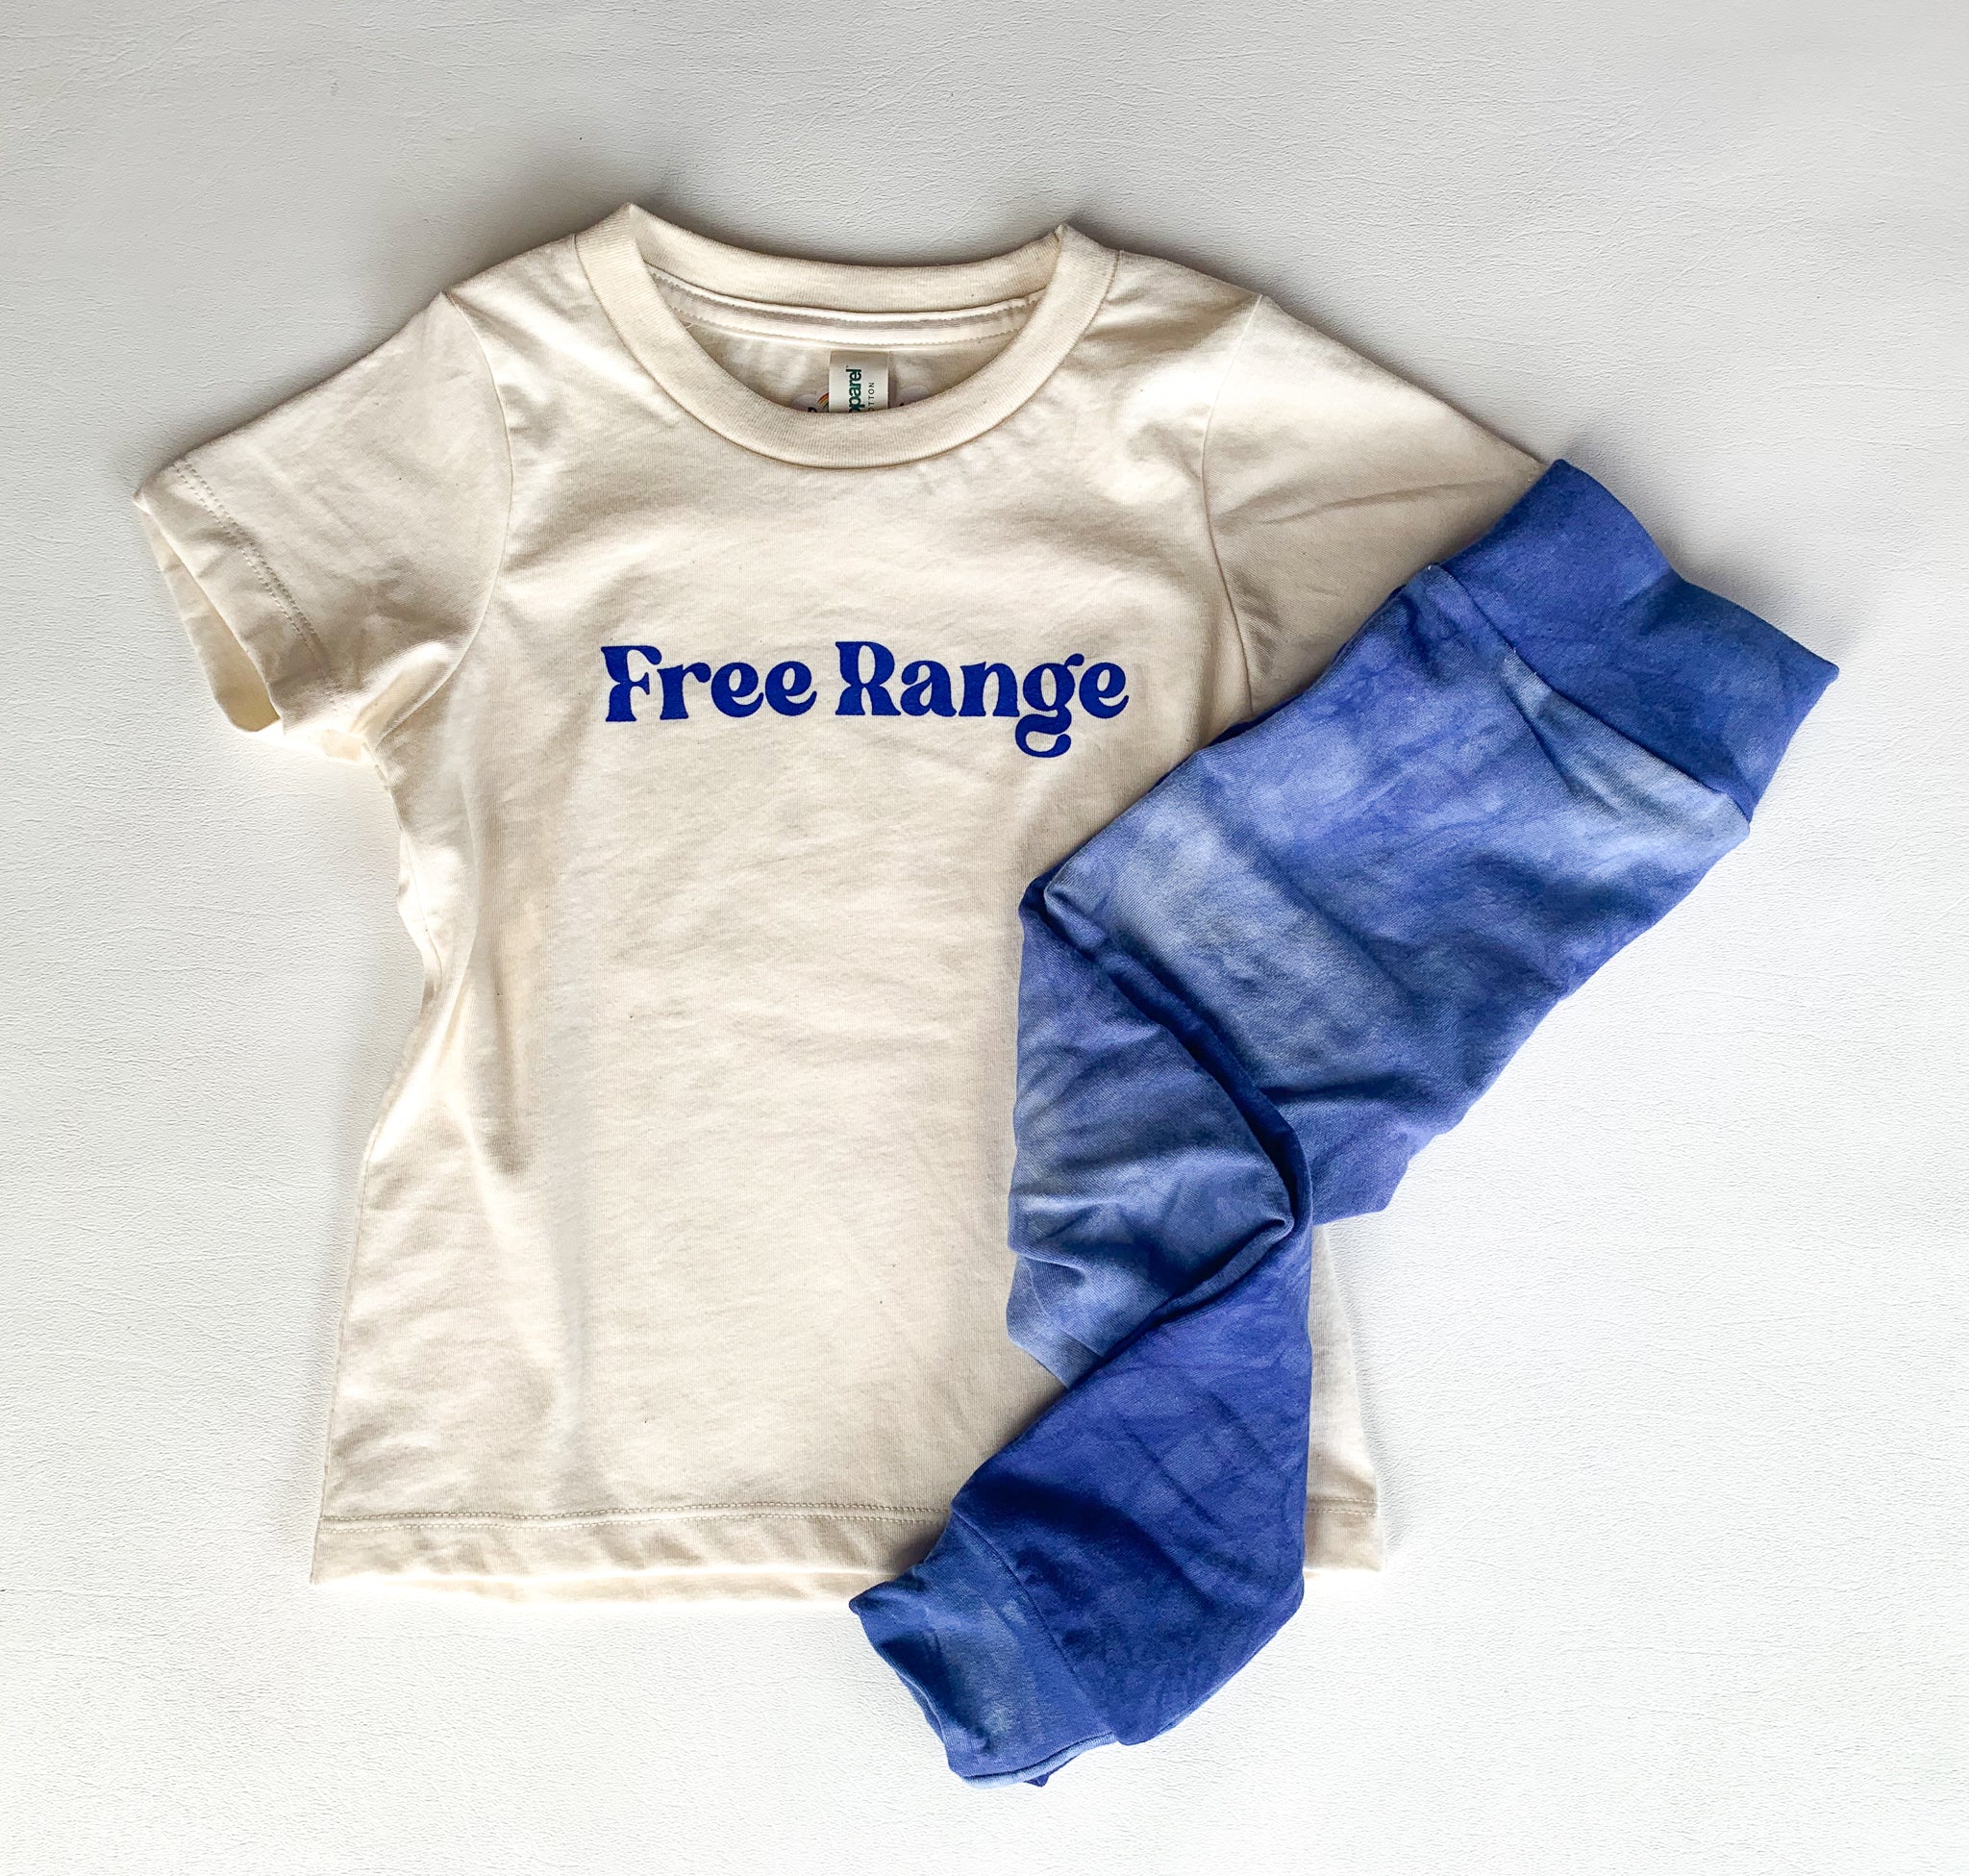 Free Range, screen printed Organic Cotton Tee